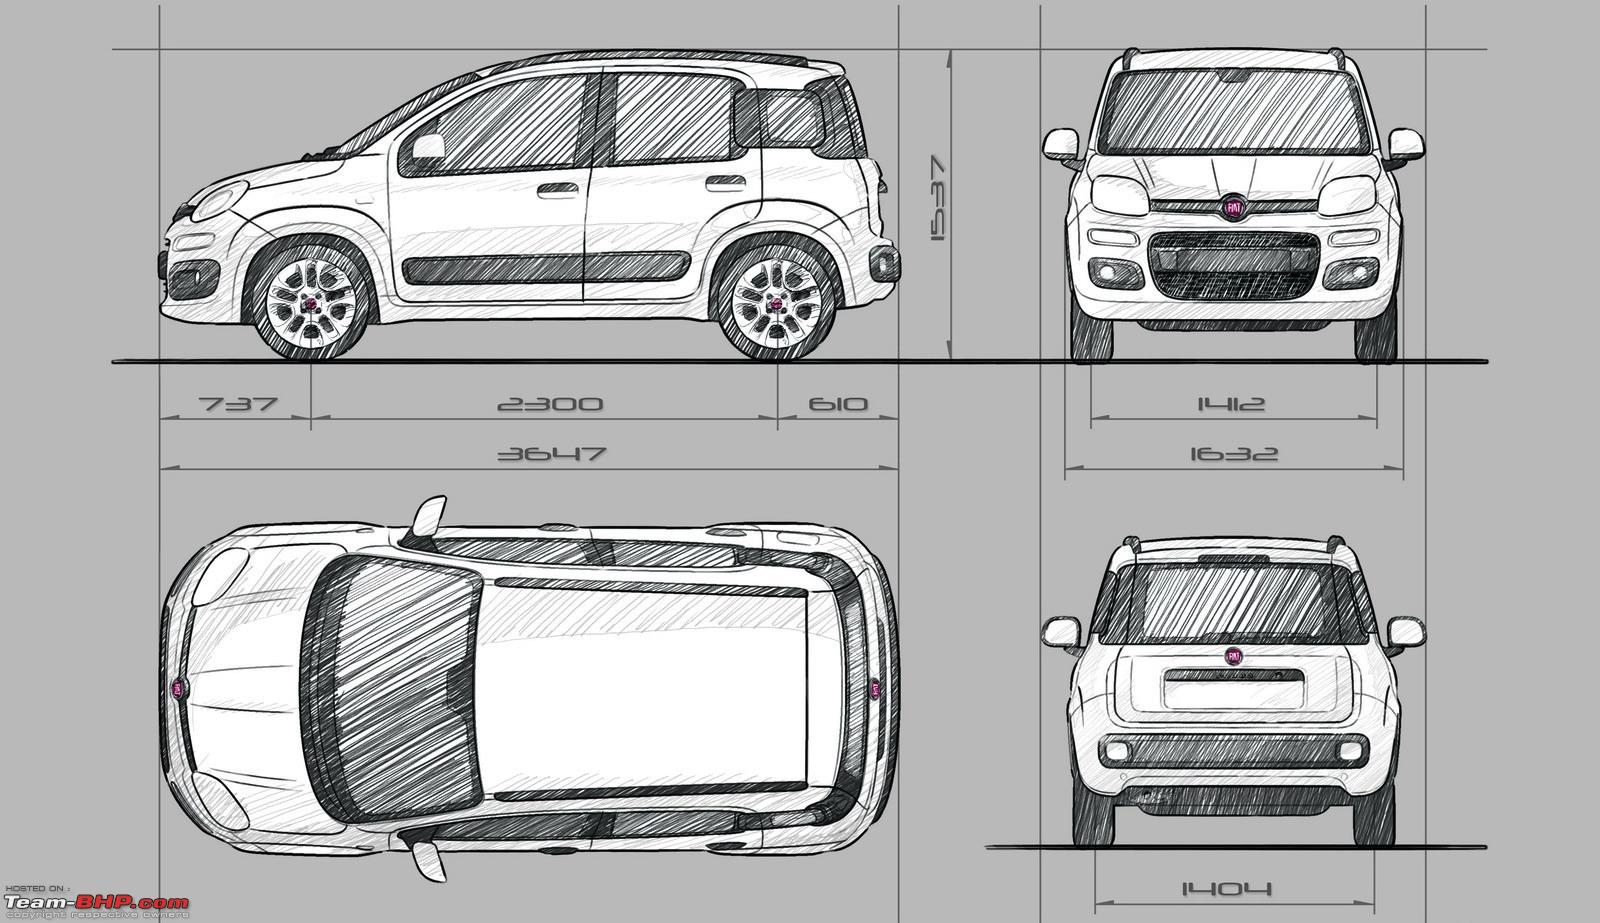 Fiat Panda Hatchback 1.3 Multijet - Page 2 - Team-BHP